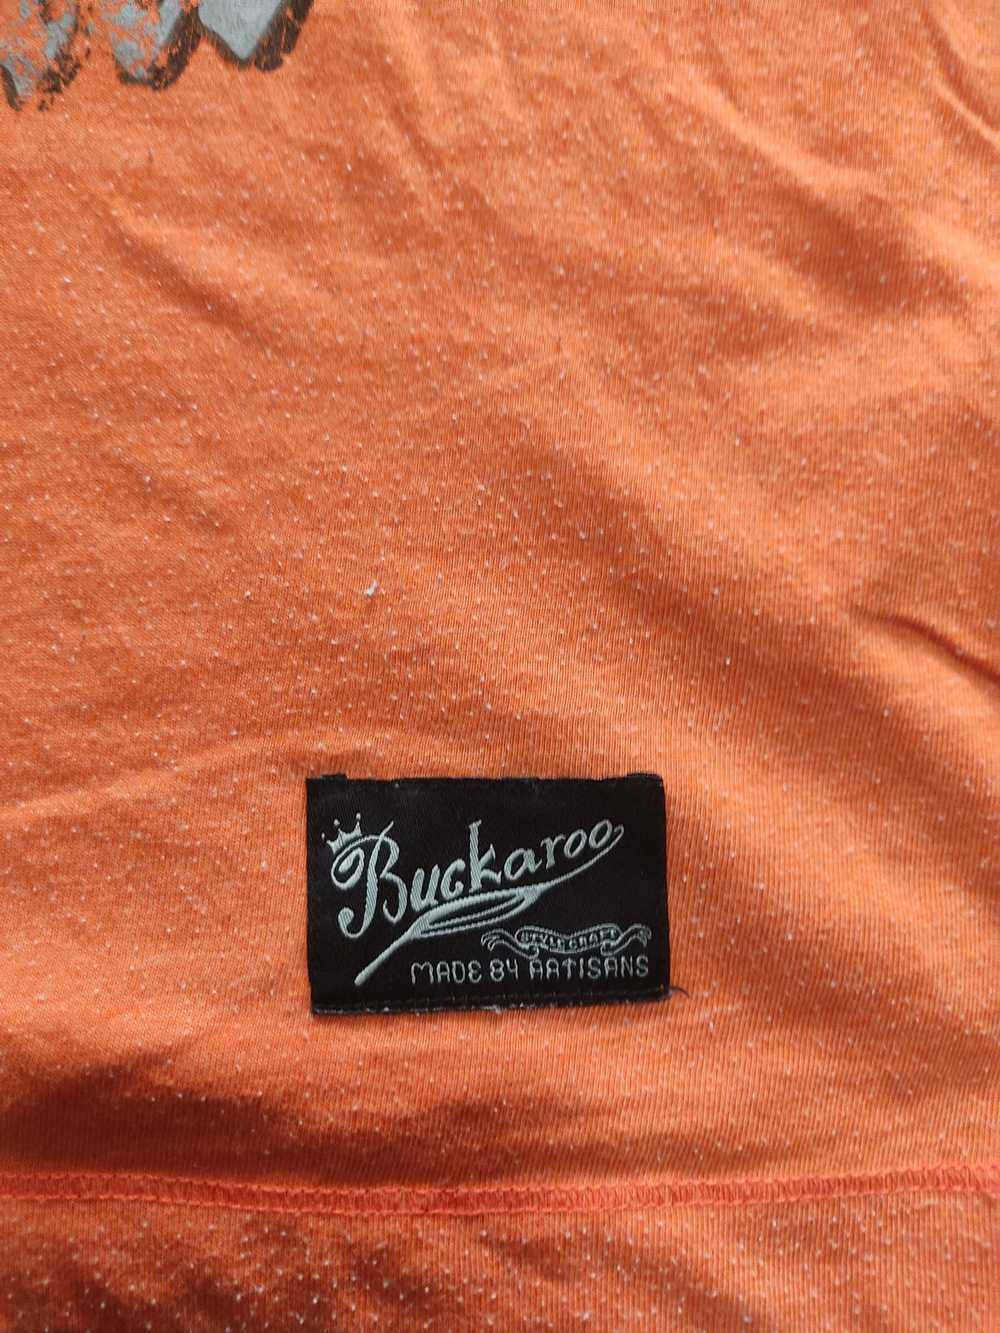 Japanese Brand Buckaroo - image 6